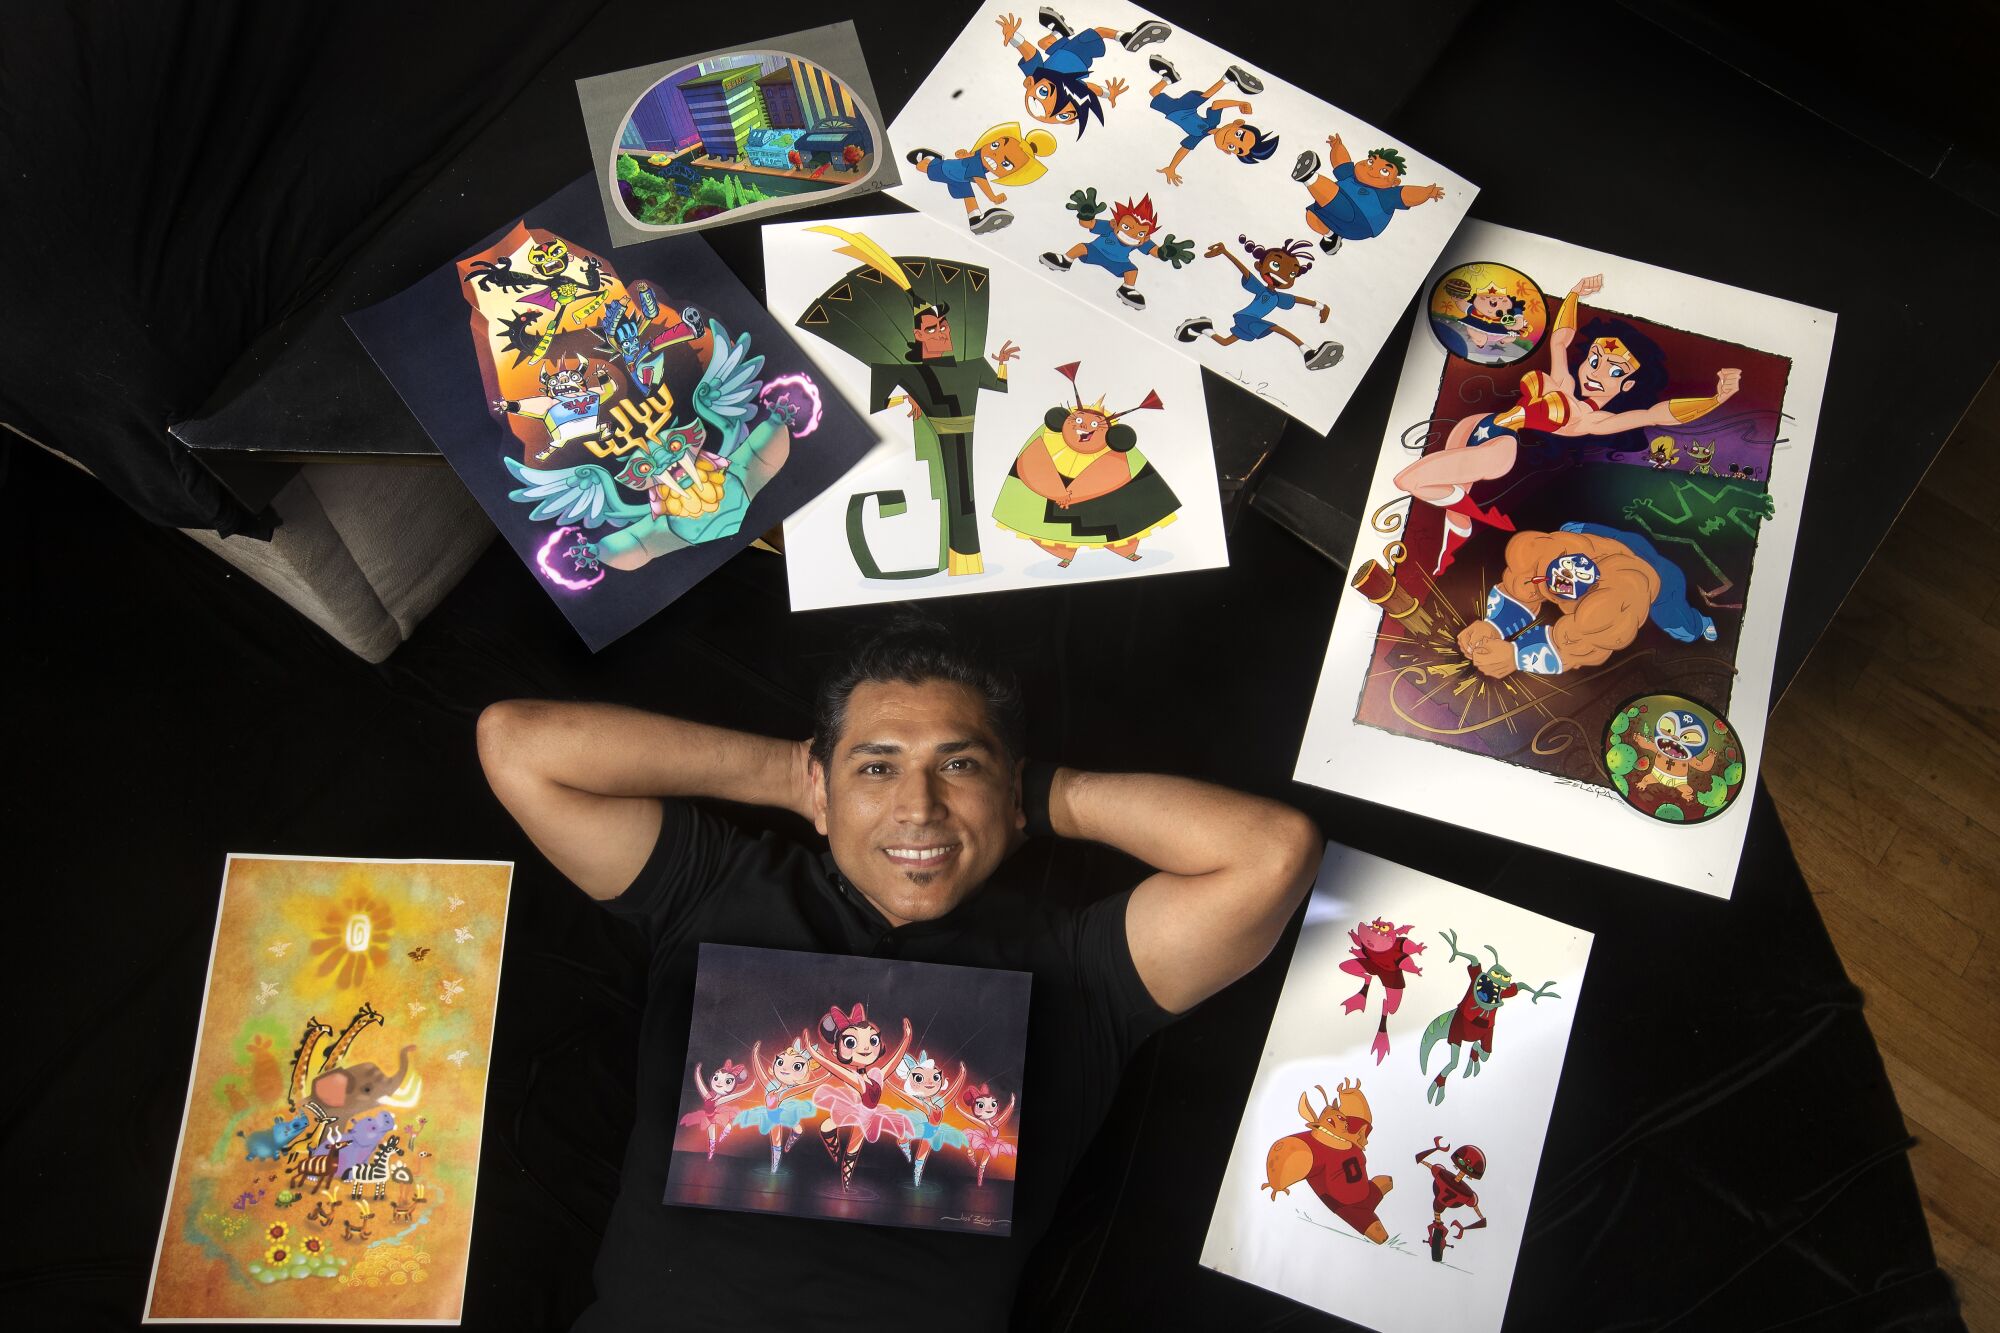 El Salvador upbringing inspires Disney animator's career - Los Angeles Times